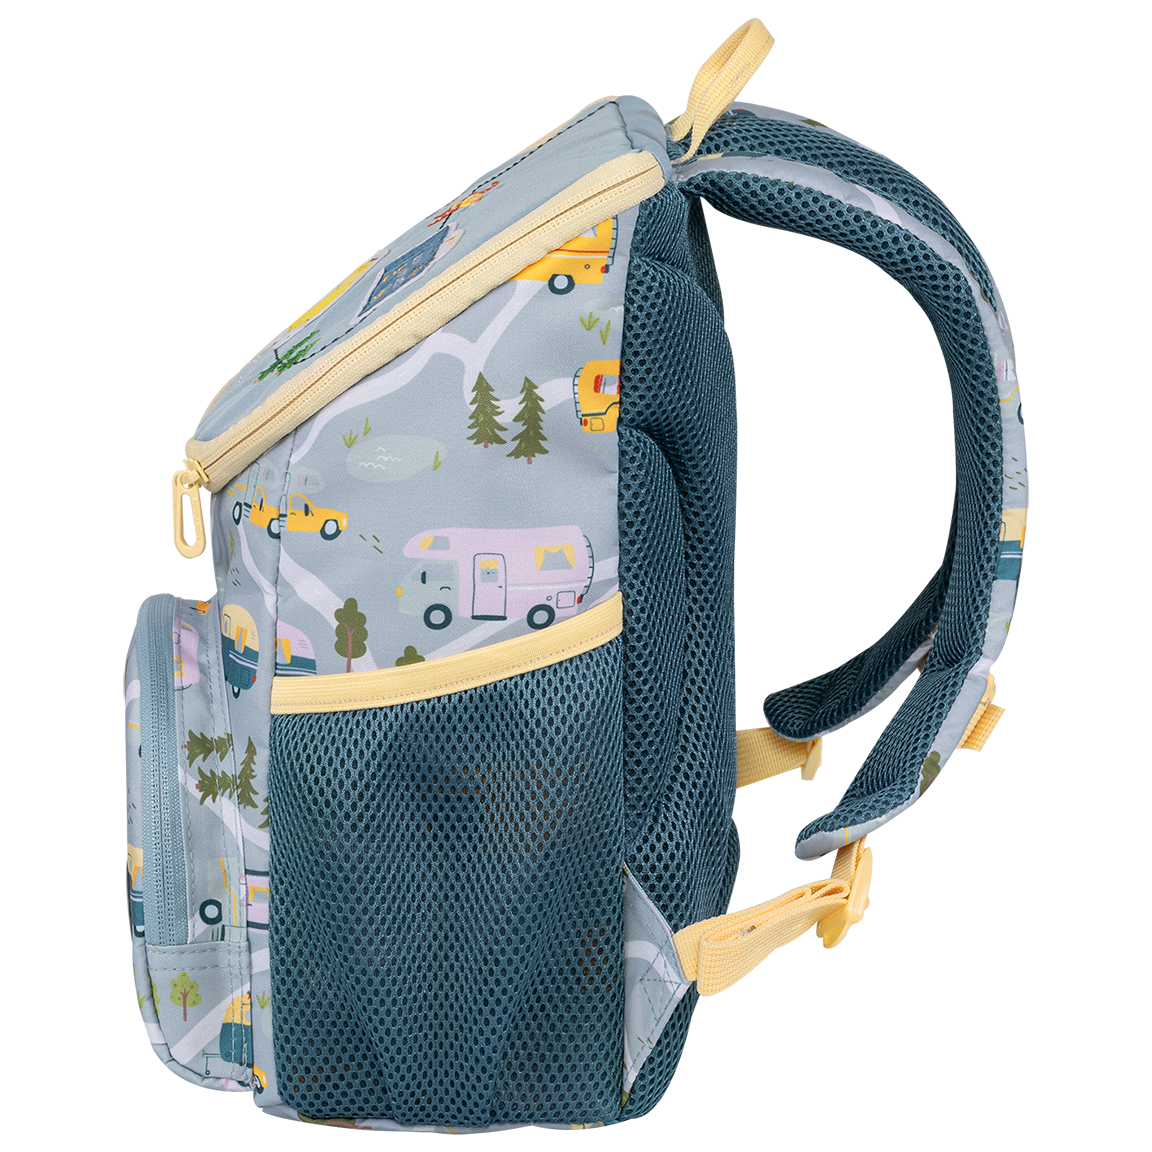 Ba Lô Mầm Non Smart Kids Little Travelers Plus Mini Backpack - Camp Time - Tiger Family SKLT-029A